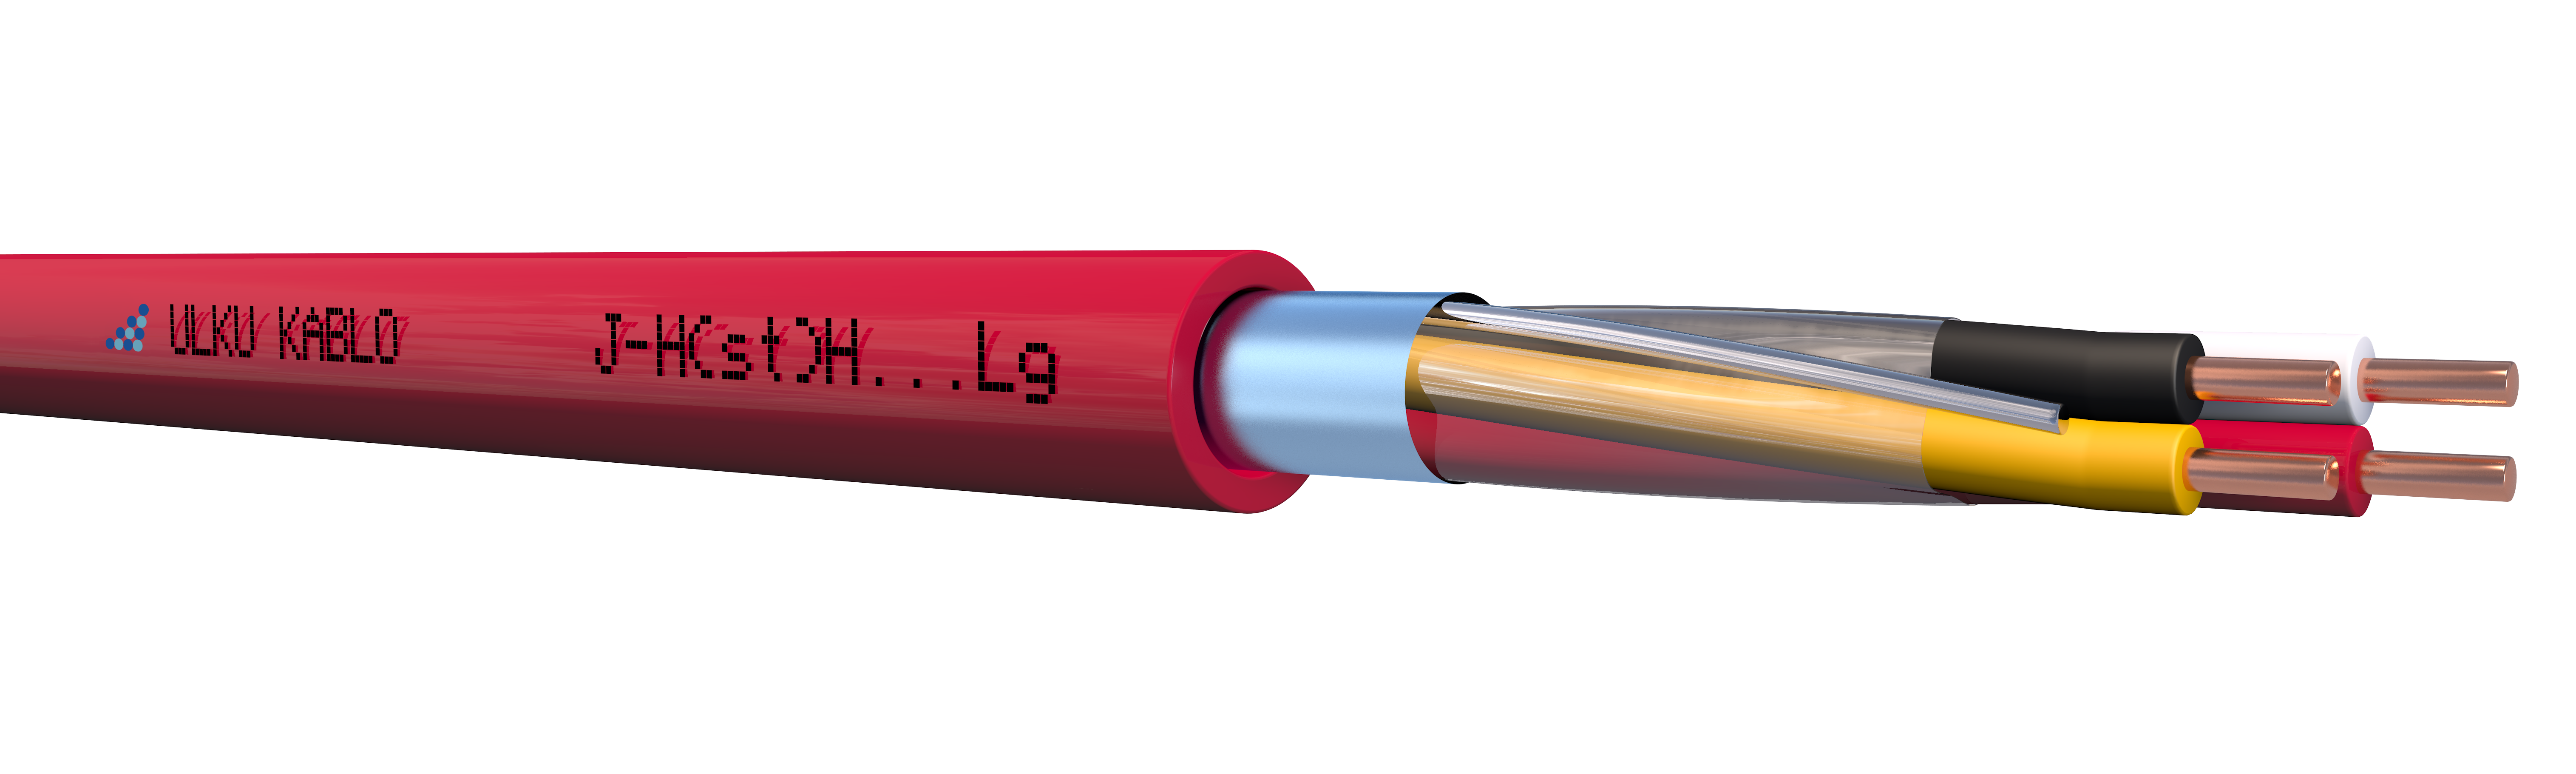 Ülkü Kablo J-H(St)H...Lg 2x2x1,50 mm²+0,80mm